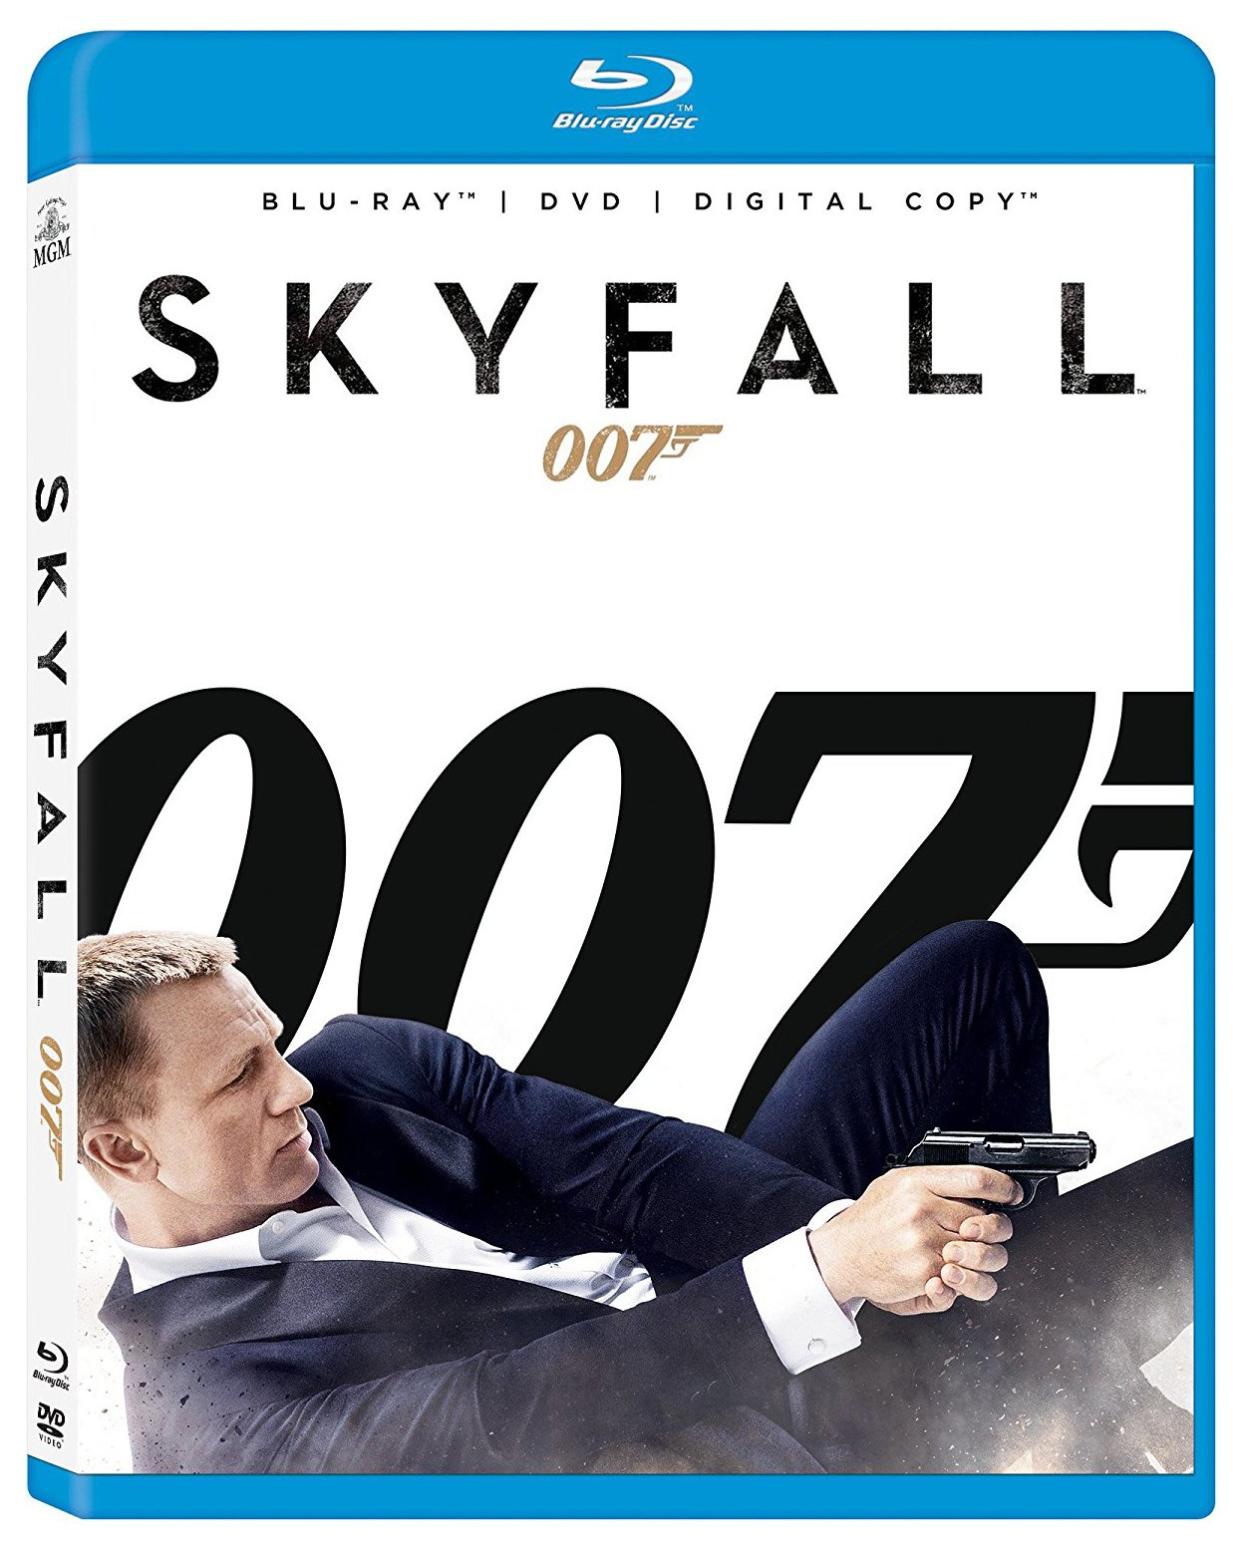 'Skyfall' on Blu-Ray